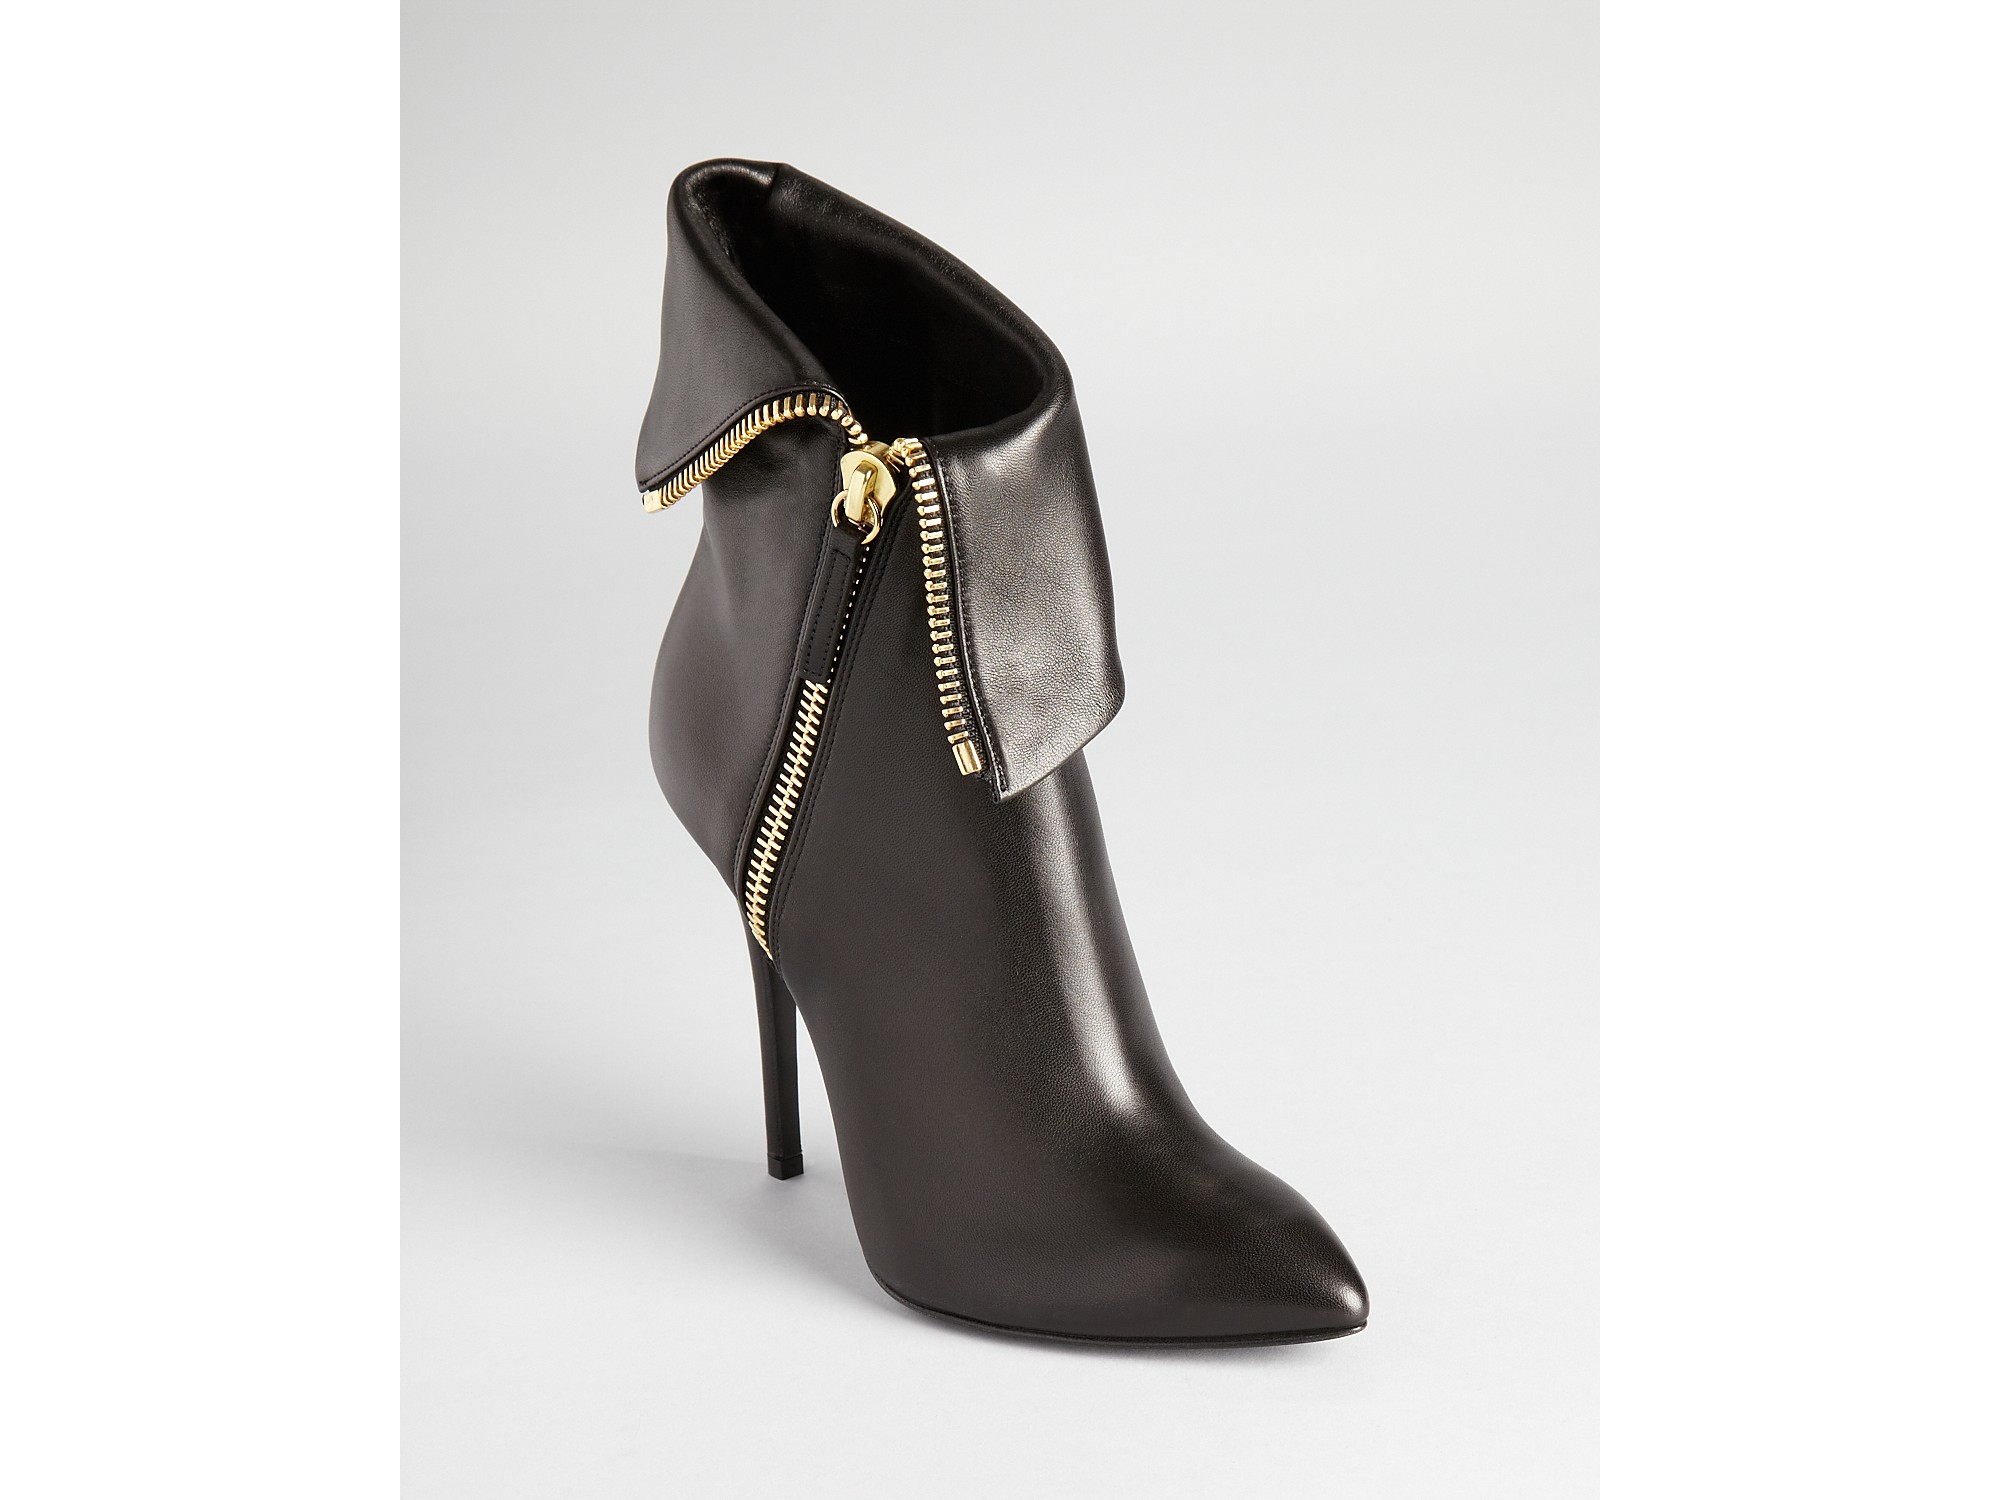 Giuseppe Zanotti Leather Foldover Zipper Ankle Boots in Nero (Black) - Lyst